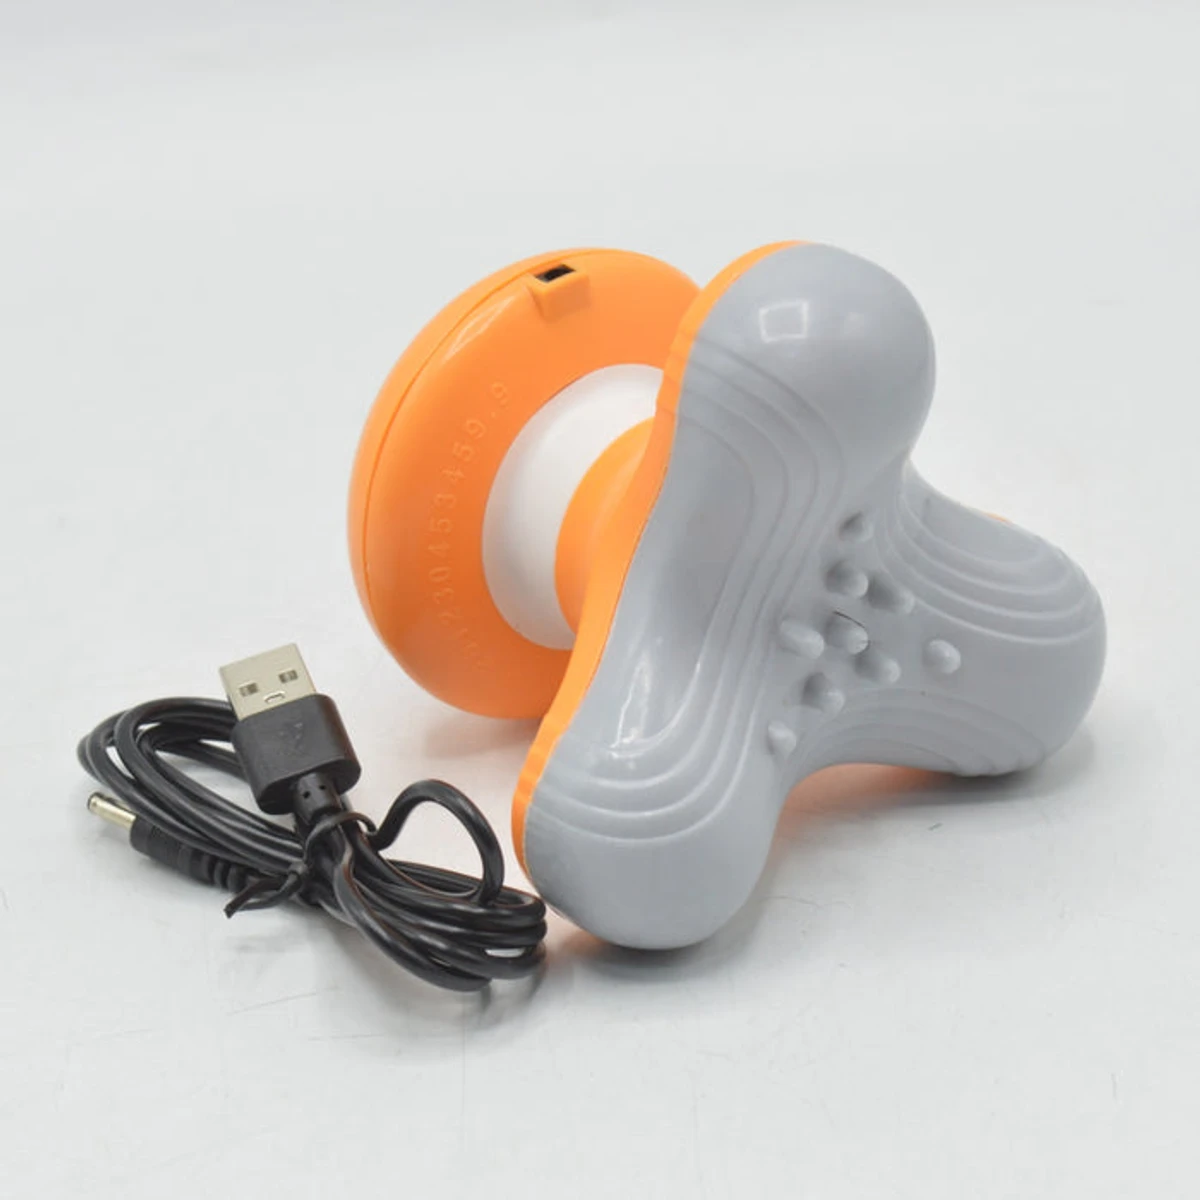 XINYAN Apple Electric Mini Handheld Vibrating Body Massagers